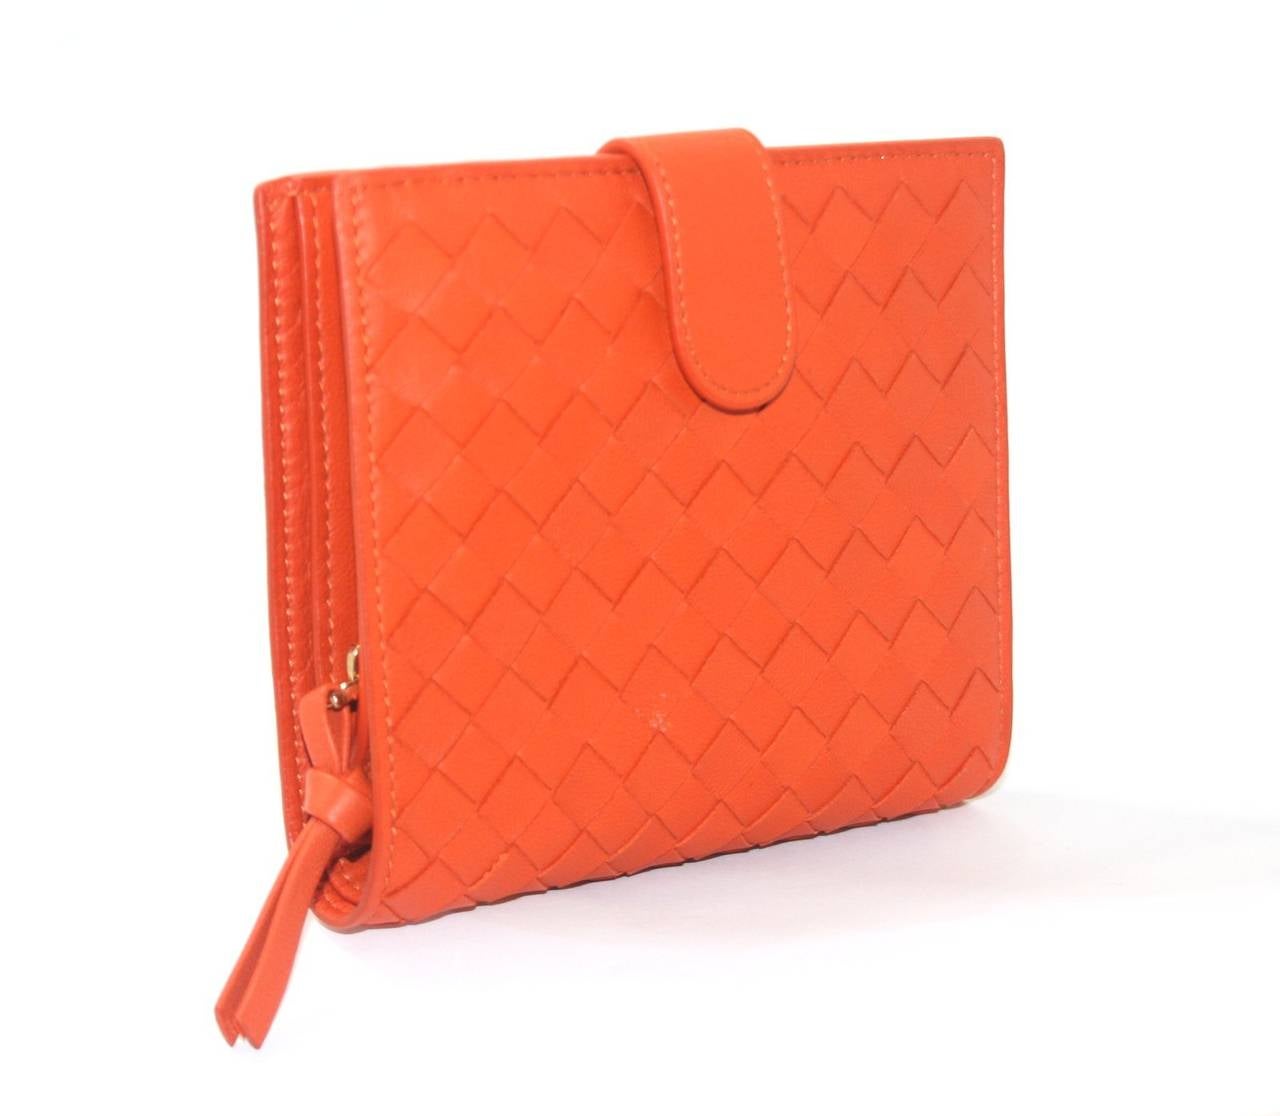 Bottega Veneta Orange Woven Leather Small Wallet In New Condition In New York City & Hamptons, NY